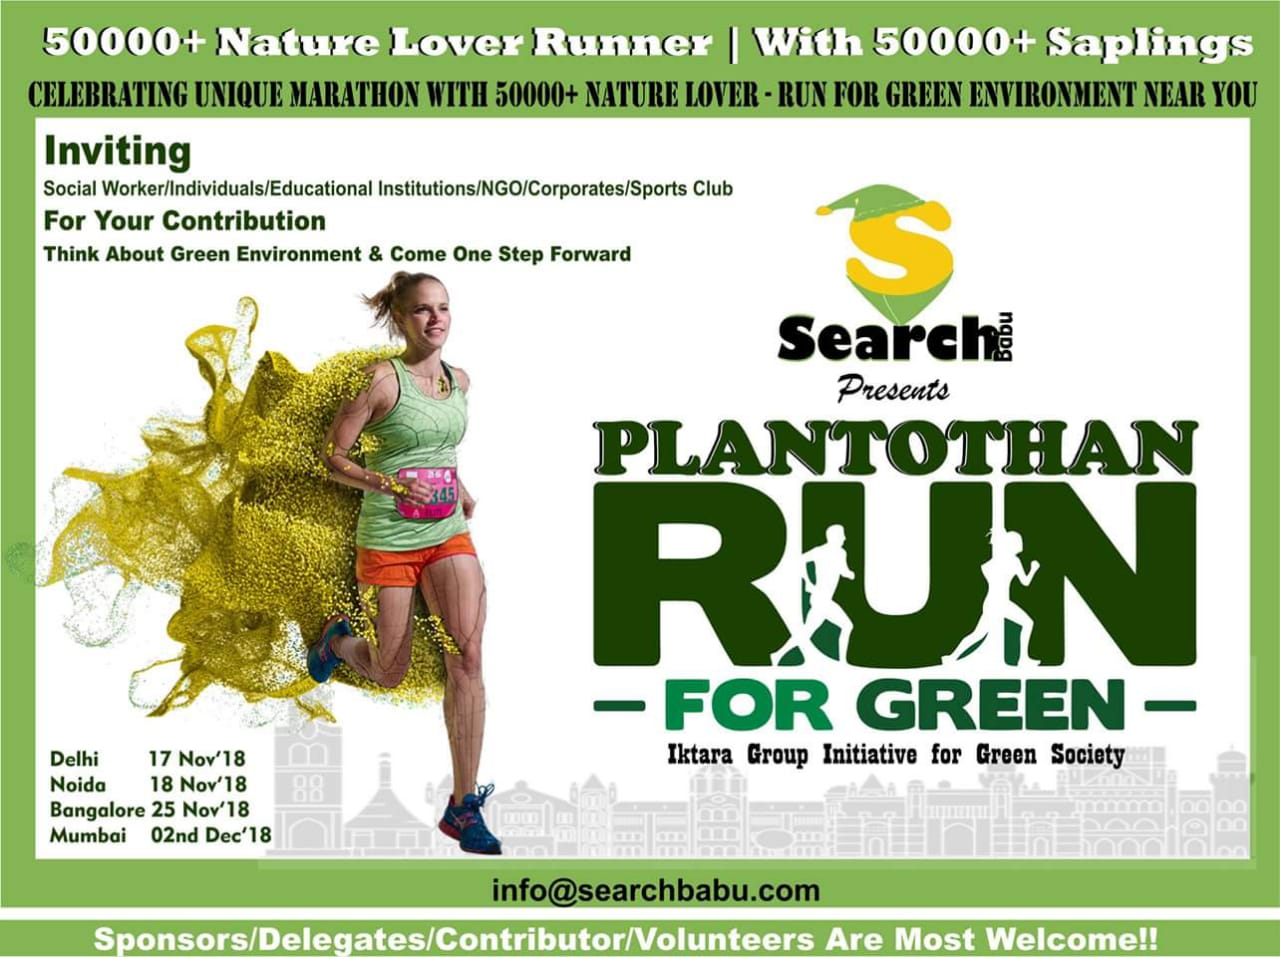 Plantothan – Run For Green Campaign By Searchbabu